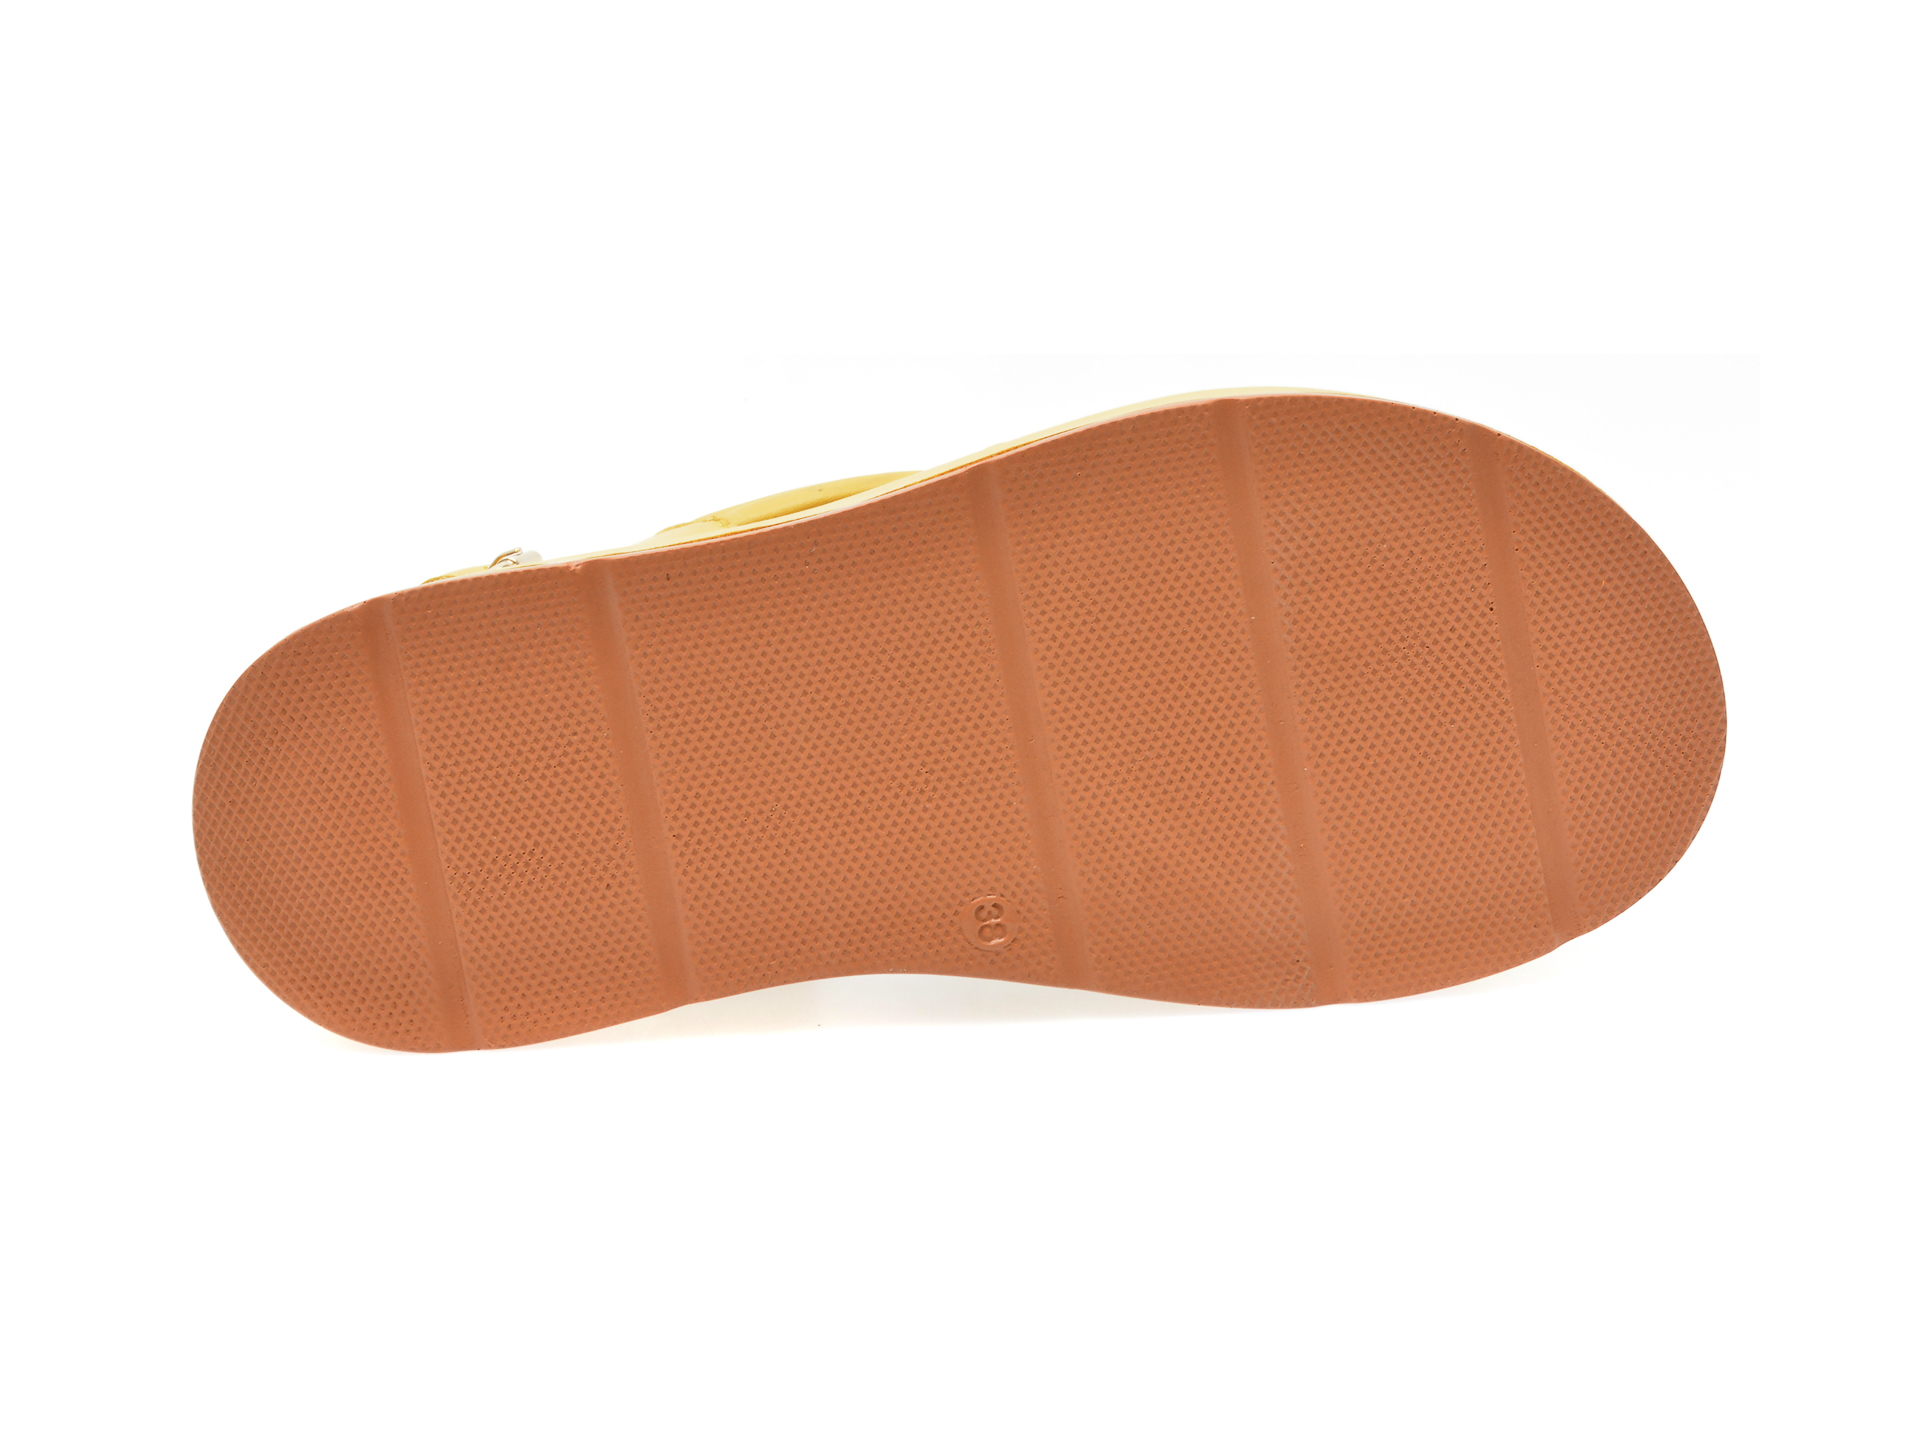 Sandale FLAVIA PASSINI galbene, 2412074, din piele naturala